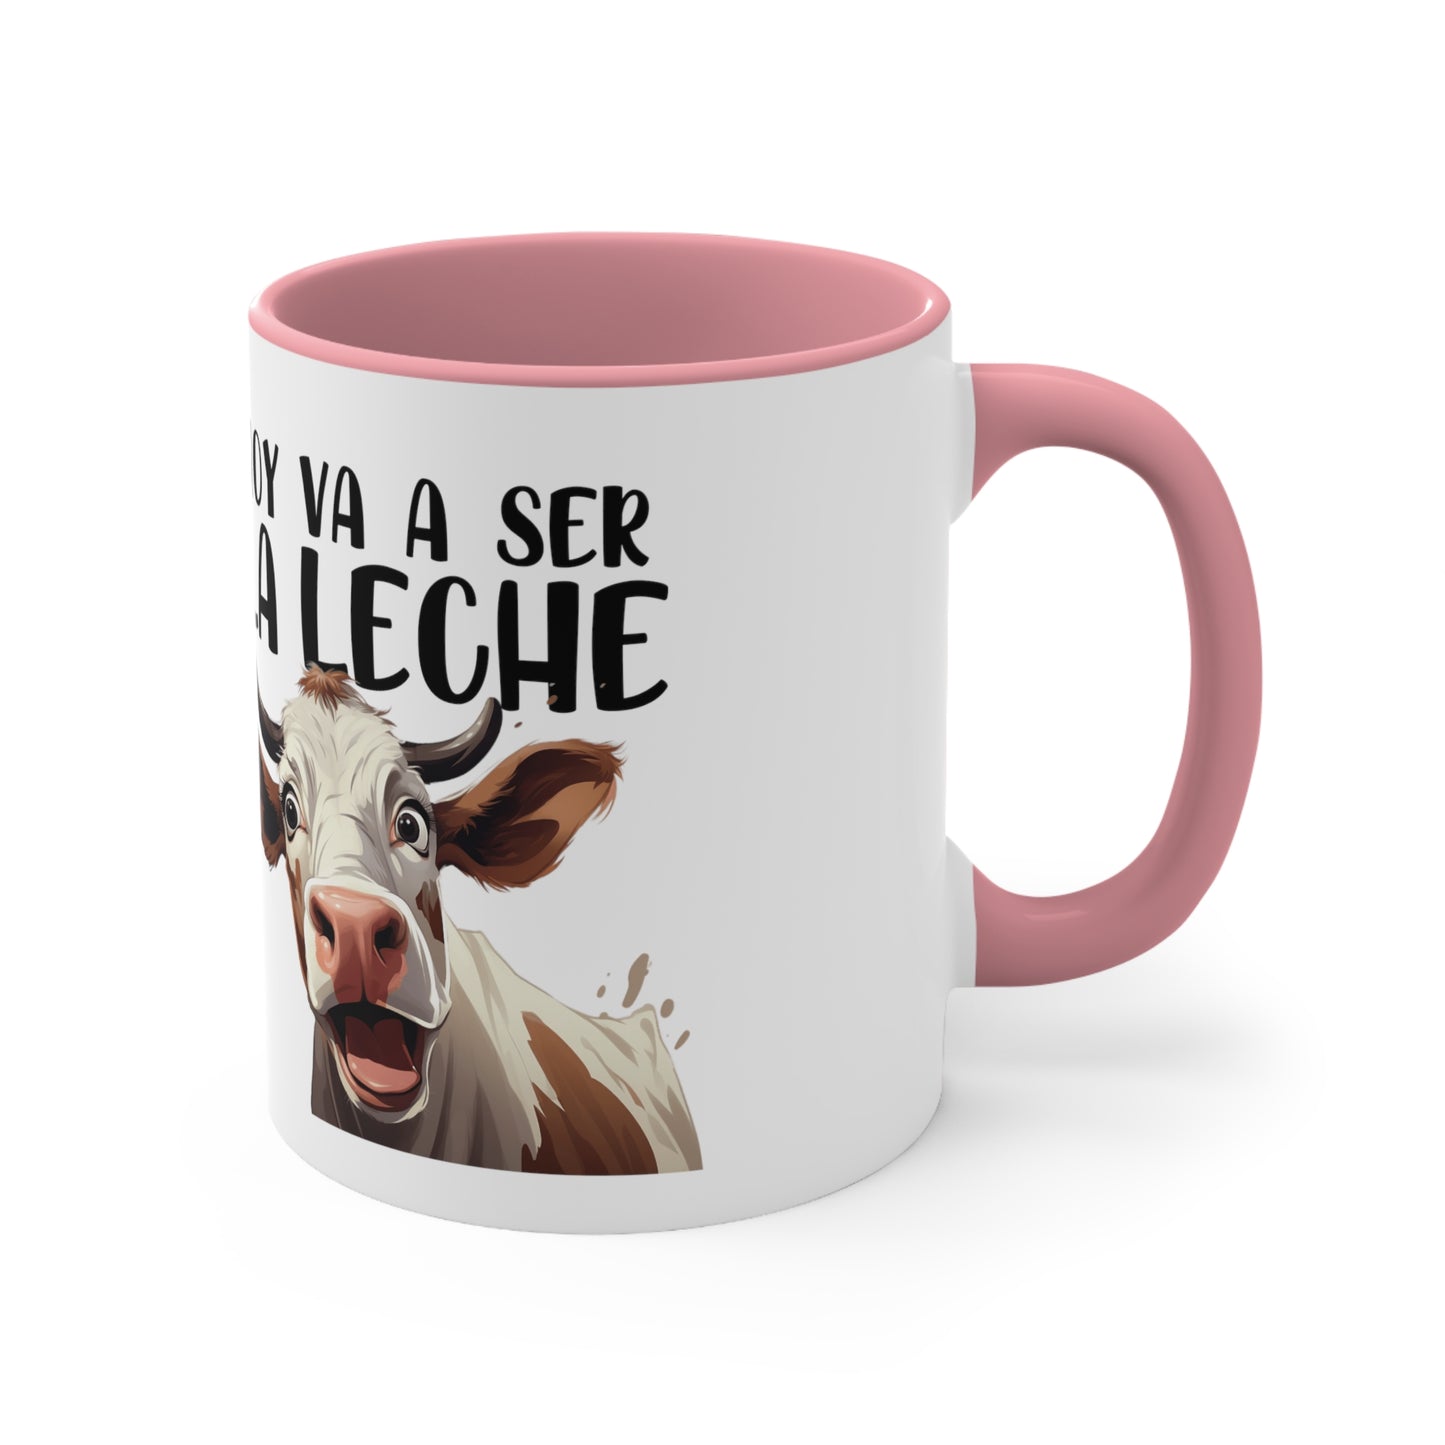 Hoy va a ser la Leche - Taza para cafe, te o chocolate / Accent Coffee Mug, 11oz